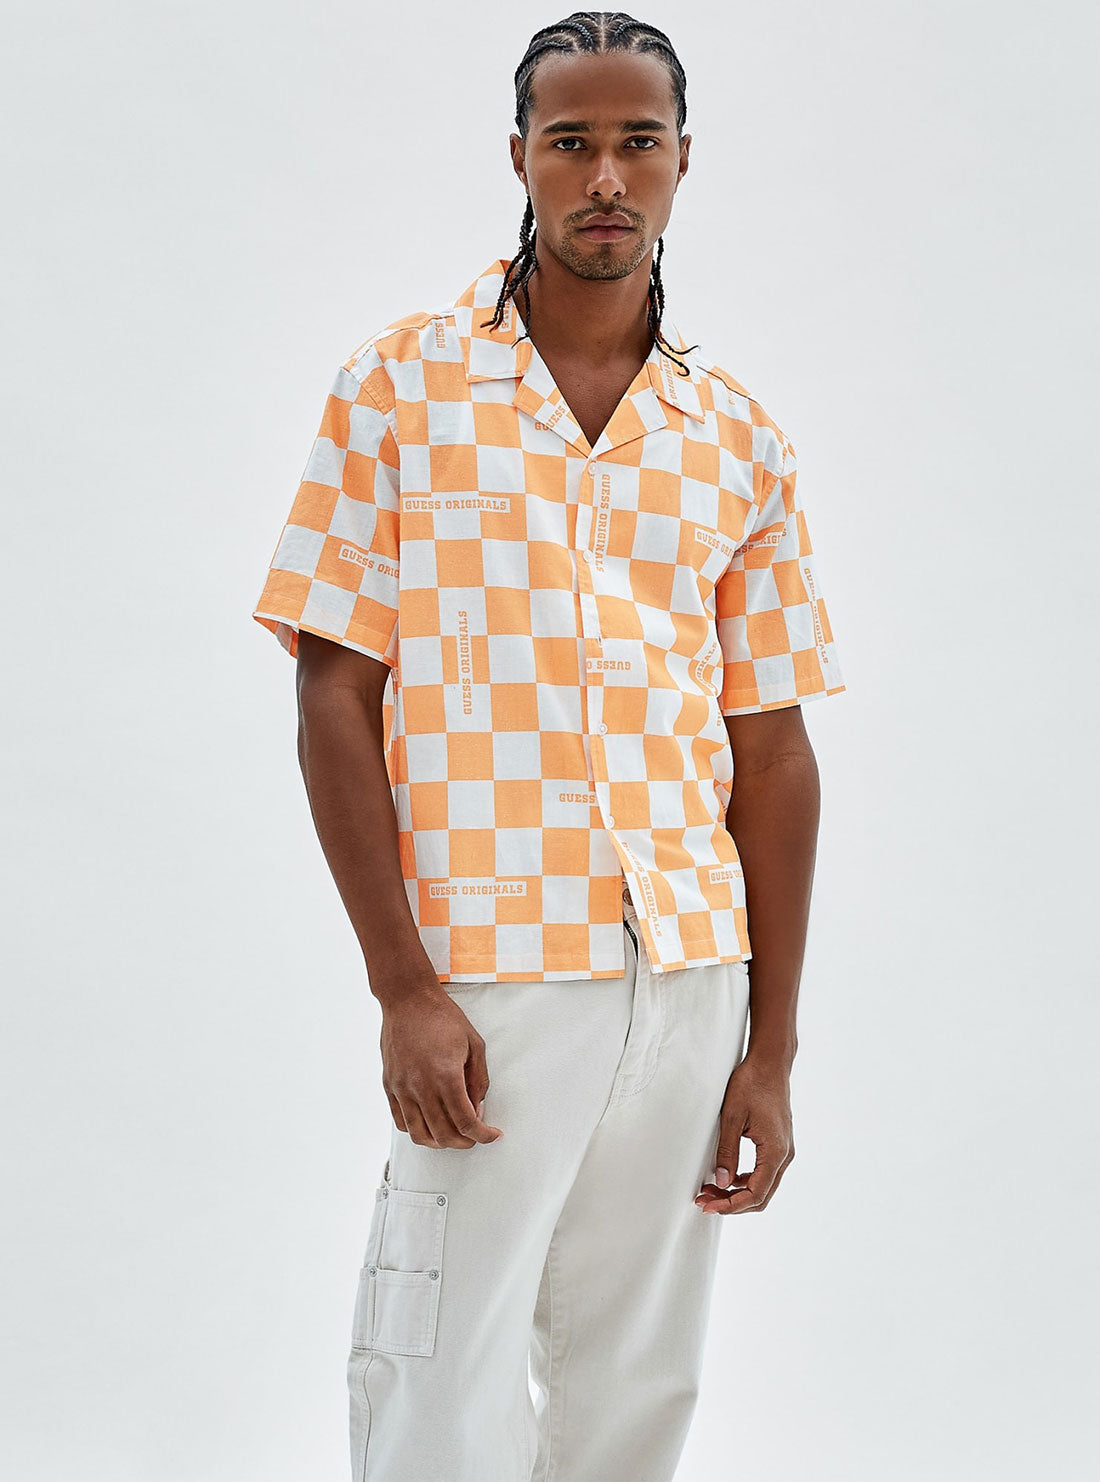 GUESS Men's Guess Originals Orange Checker Shirt M2YH00WEOZ0 Front View